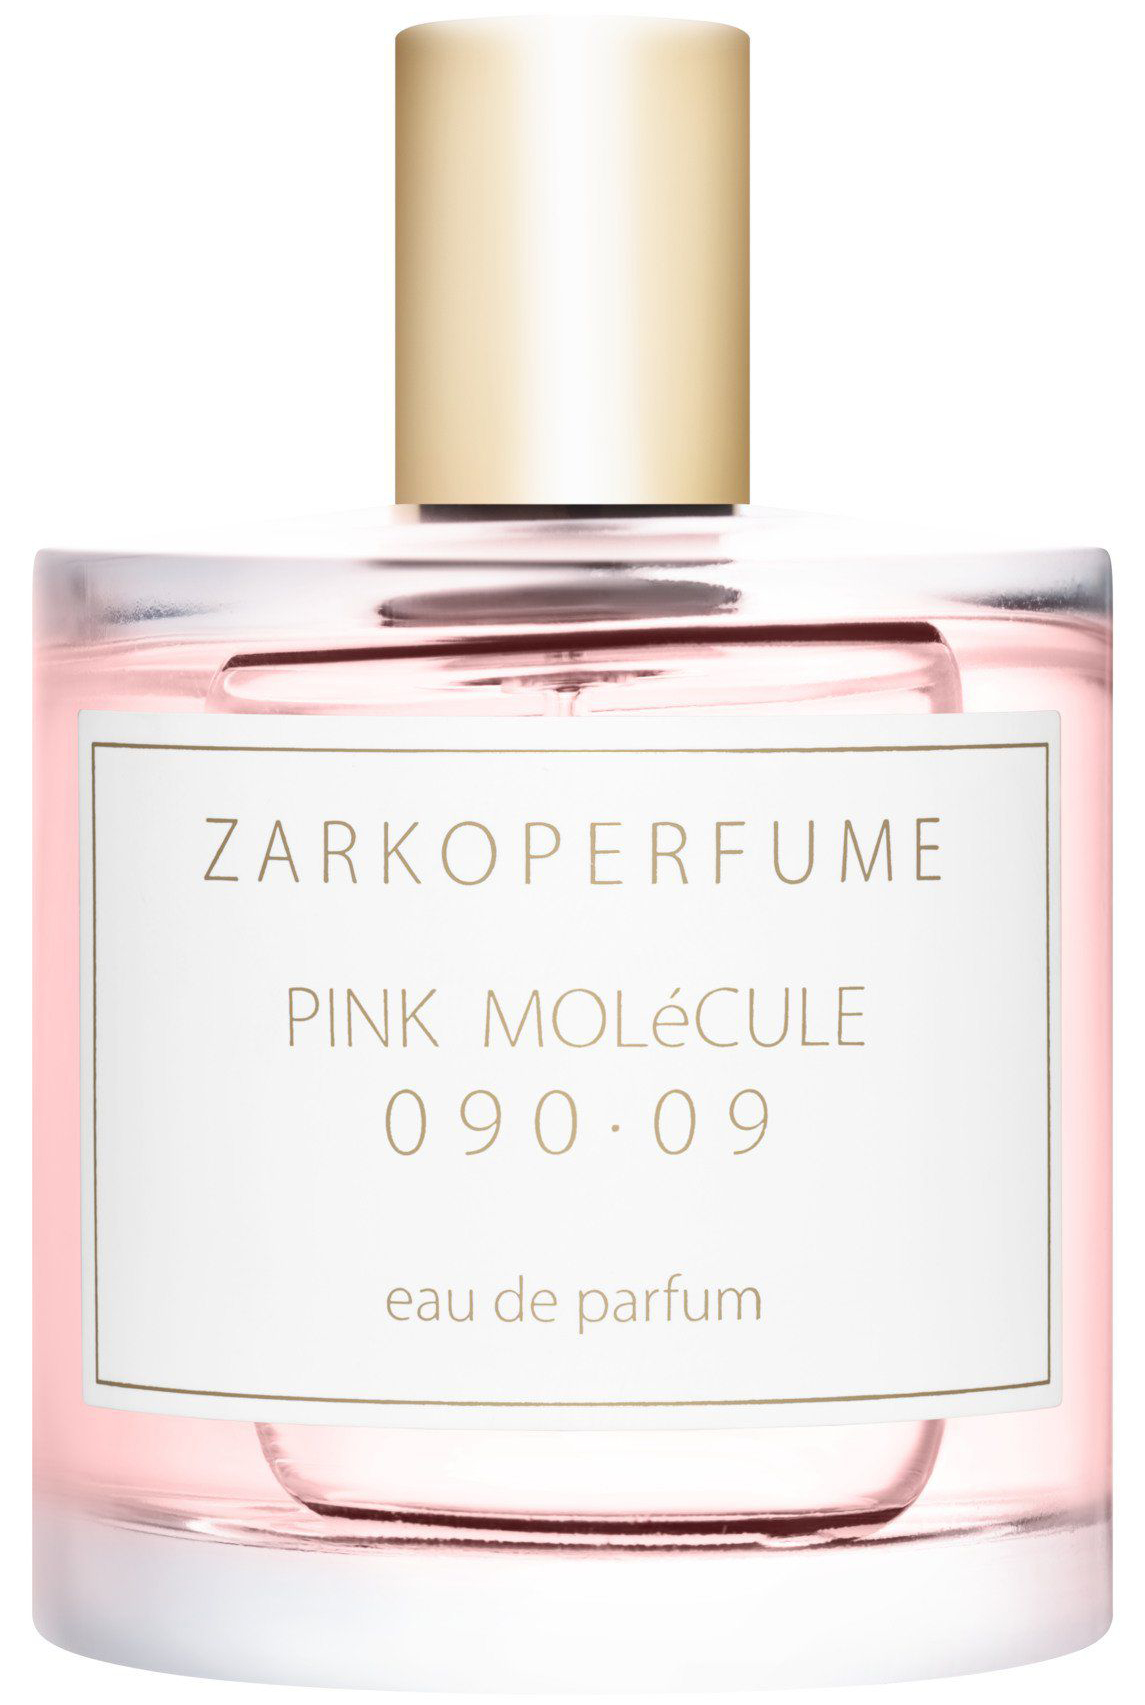 Zarkoperfume Pink Molecule 090.09(15ml)